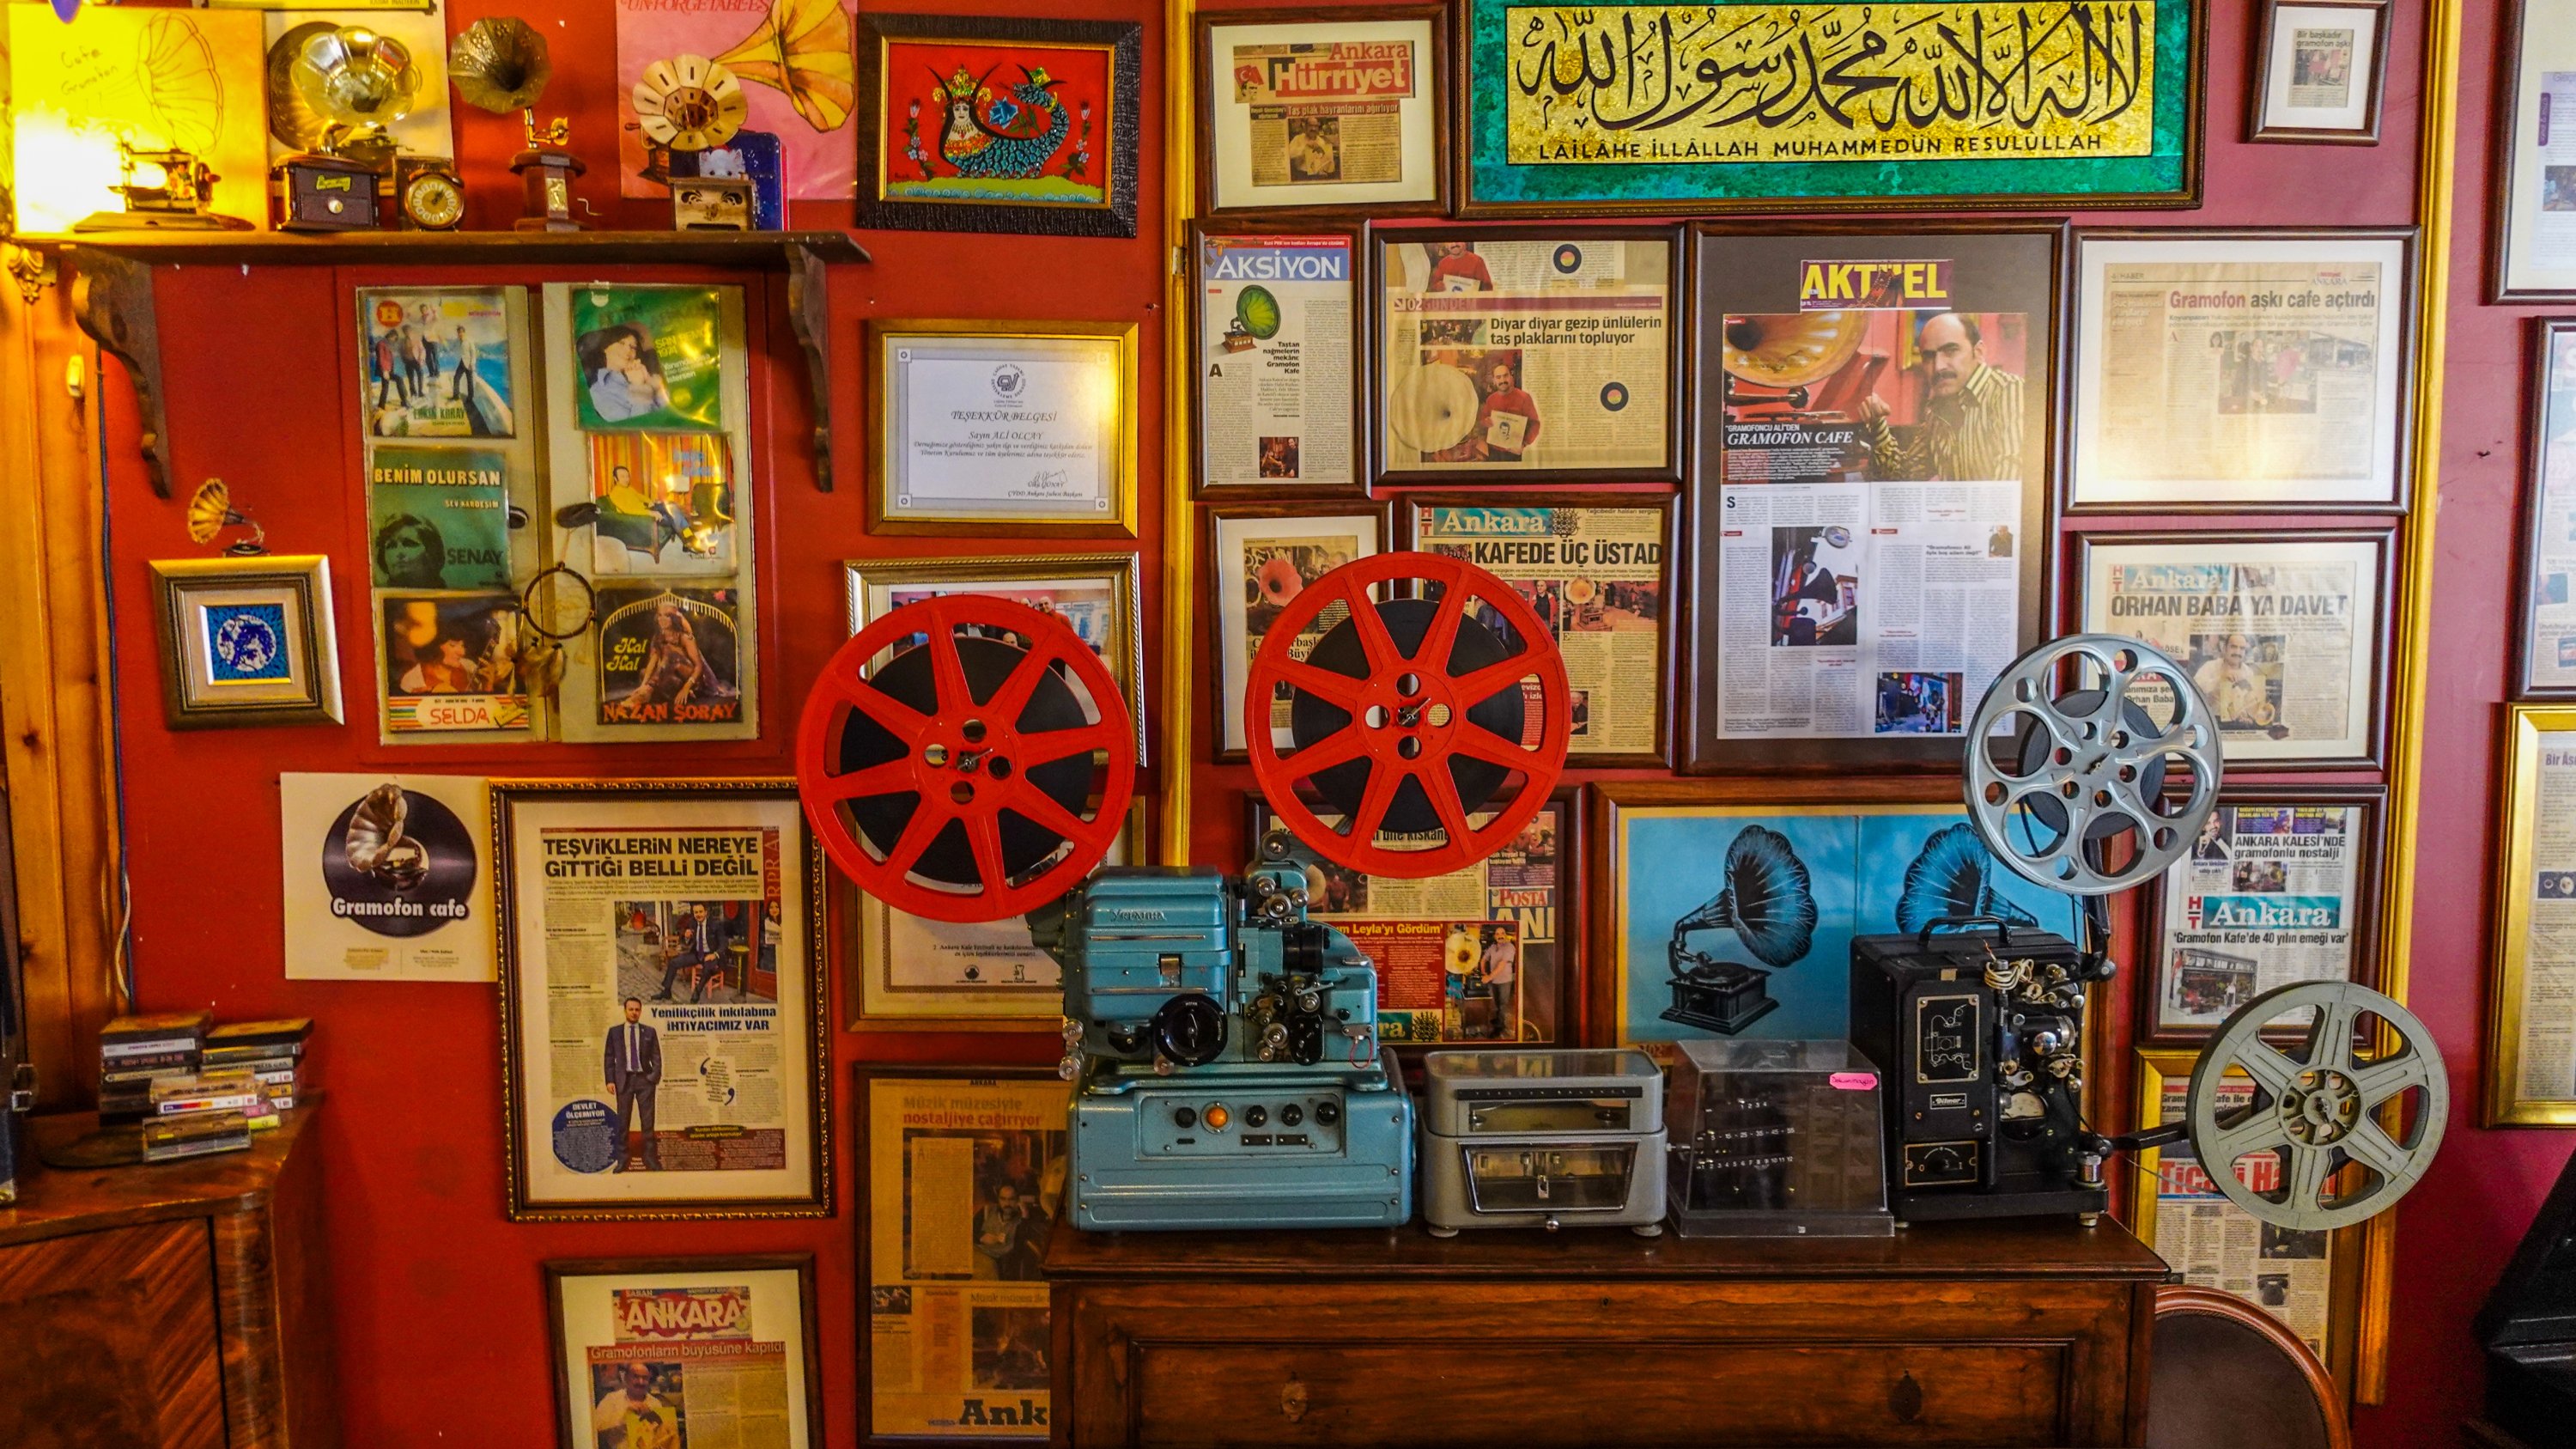 Gramofon Cafe is known for its nostalgic design and vintage atmosphere. (Photo by Argun Konuk)